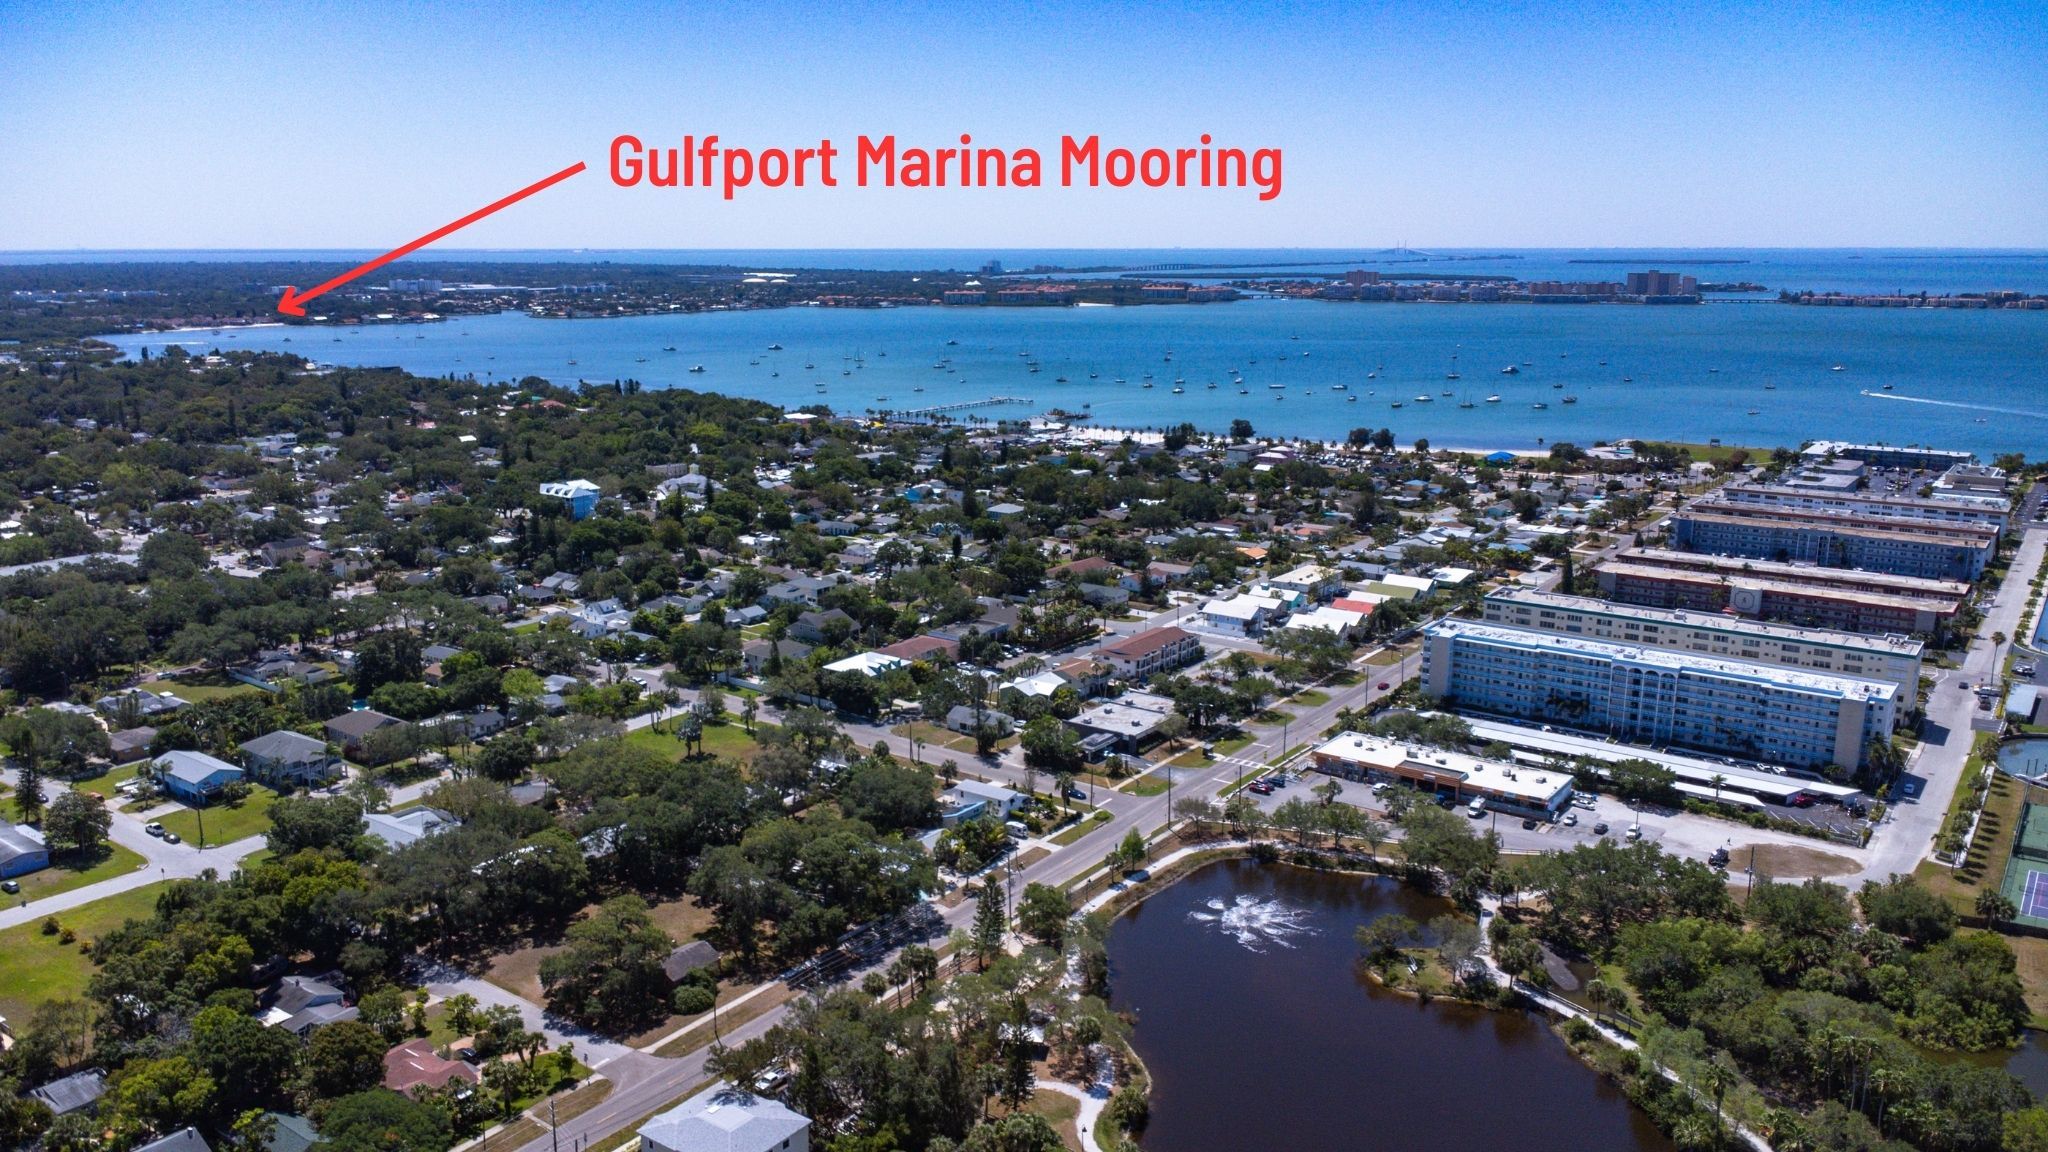 Gulfport Marina Mooring